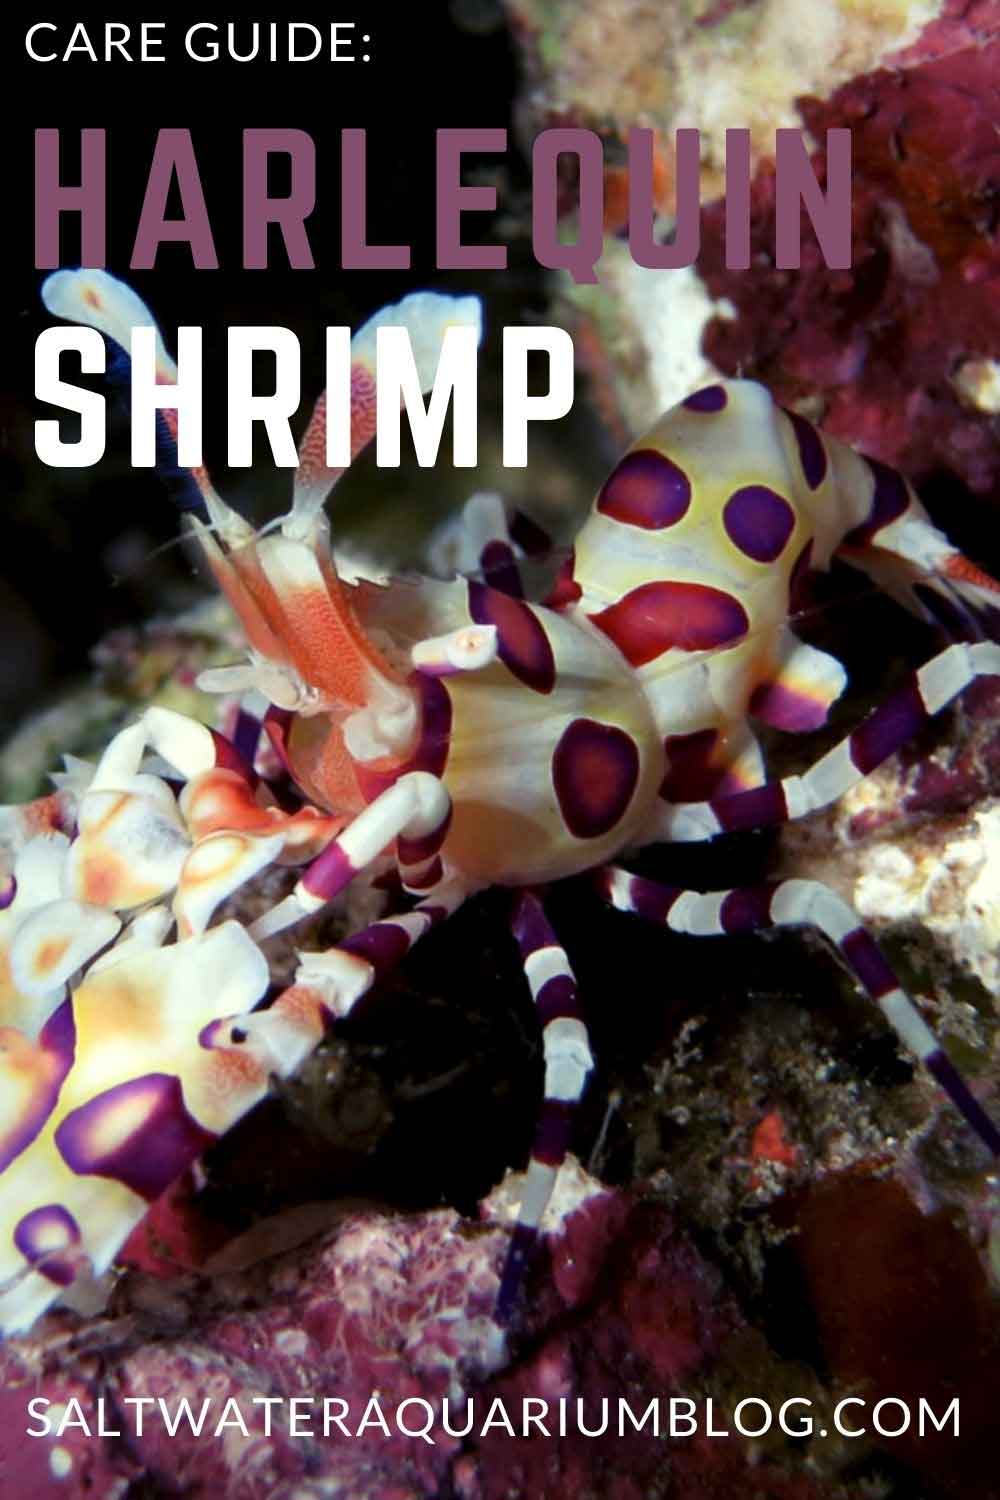 Harlequin shrimp care guide